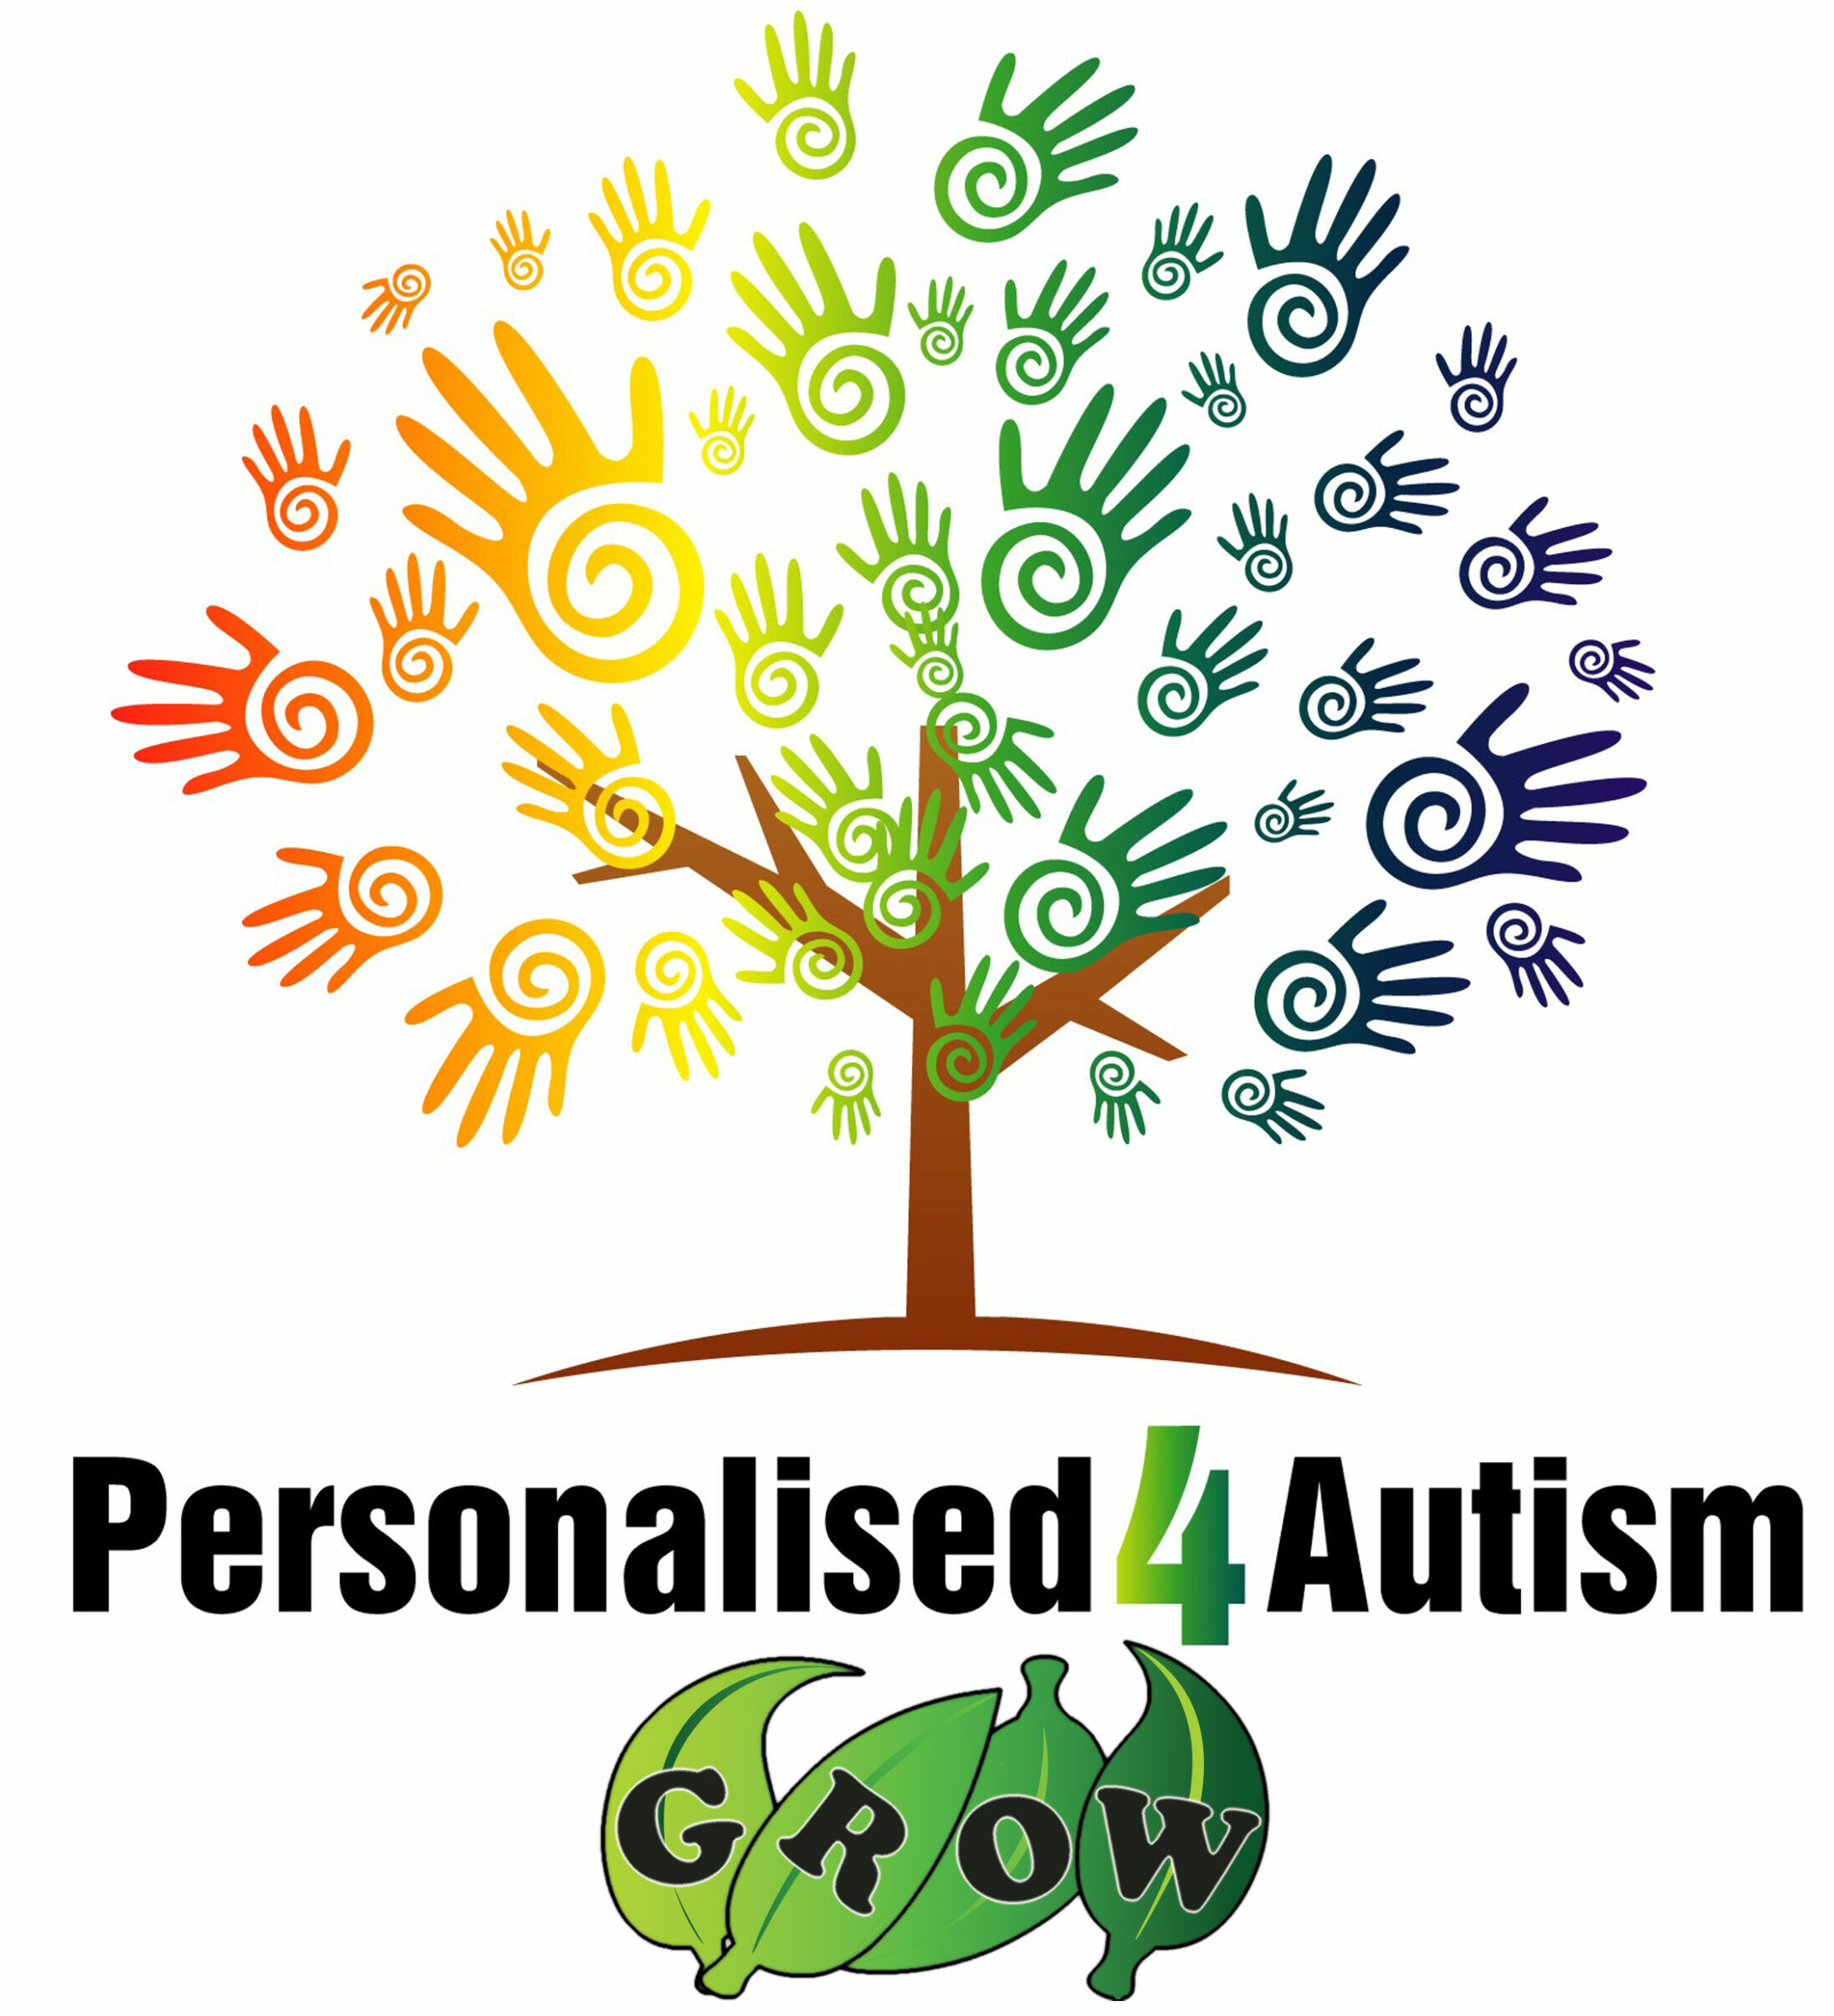 Personalised 4 Autism